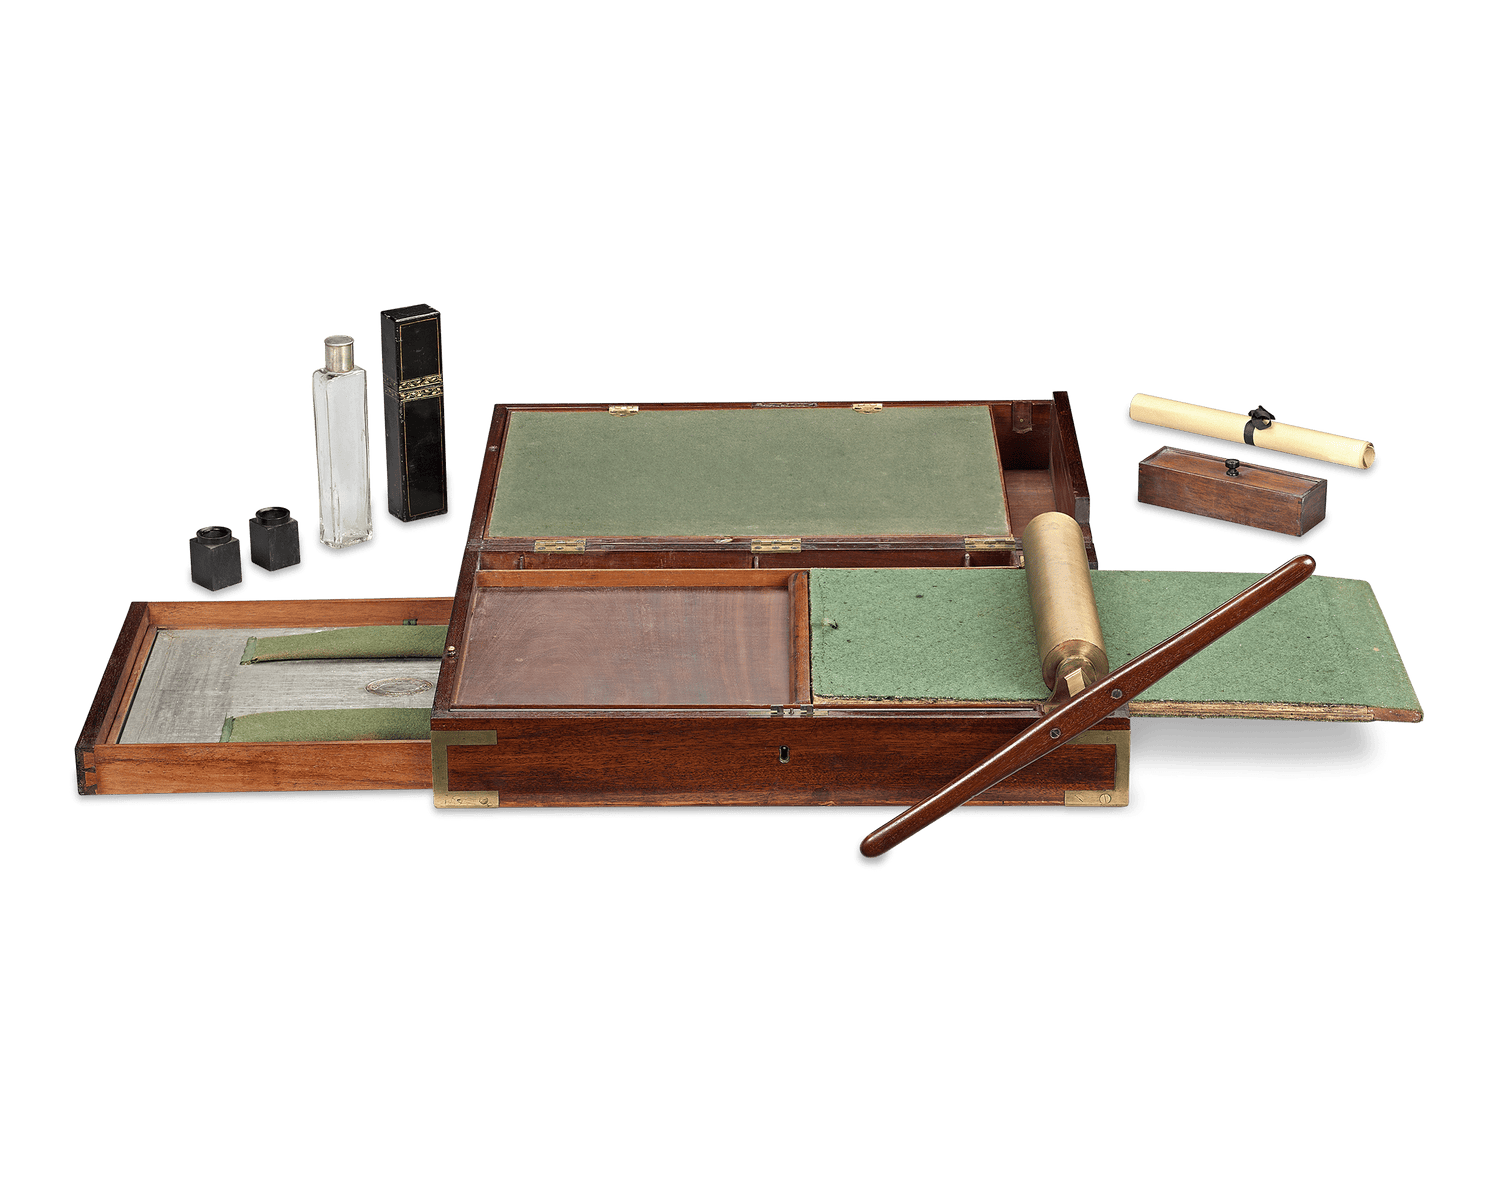 Portable Copying Machine by James Watt & Co.